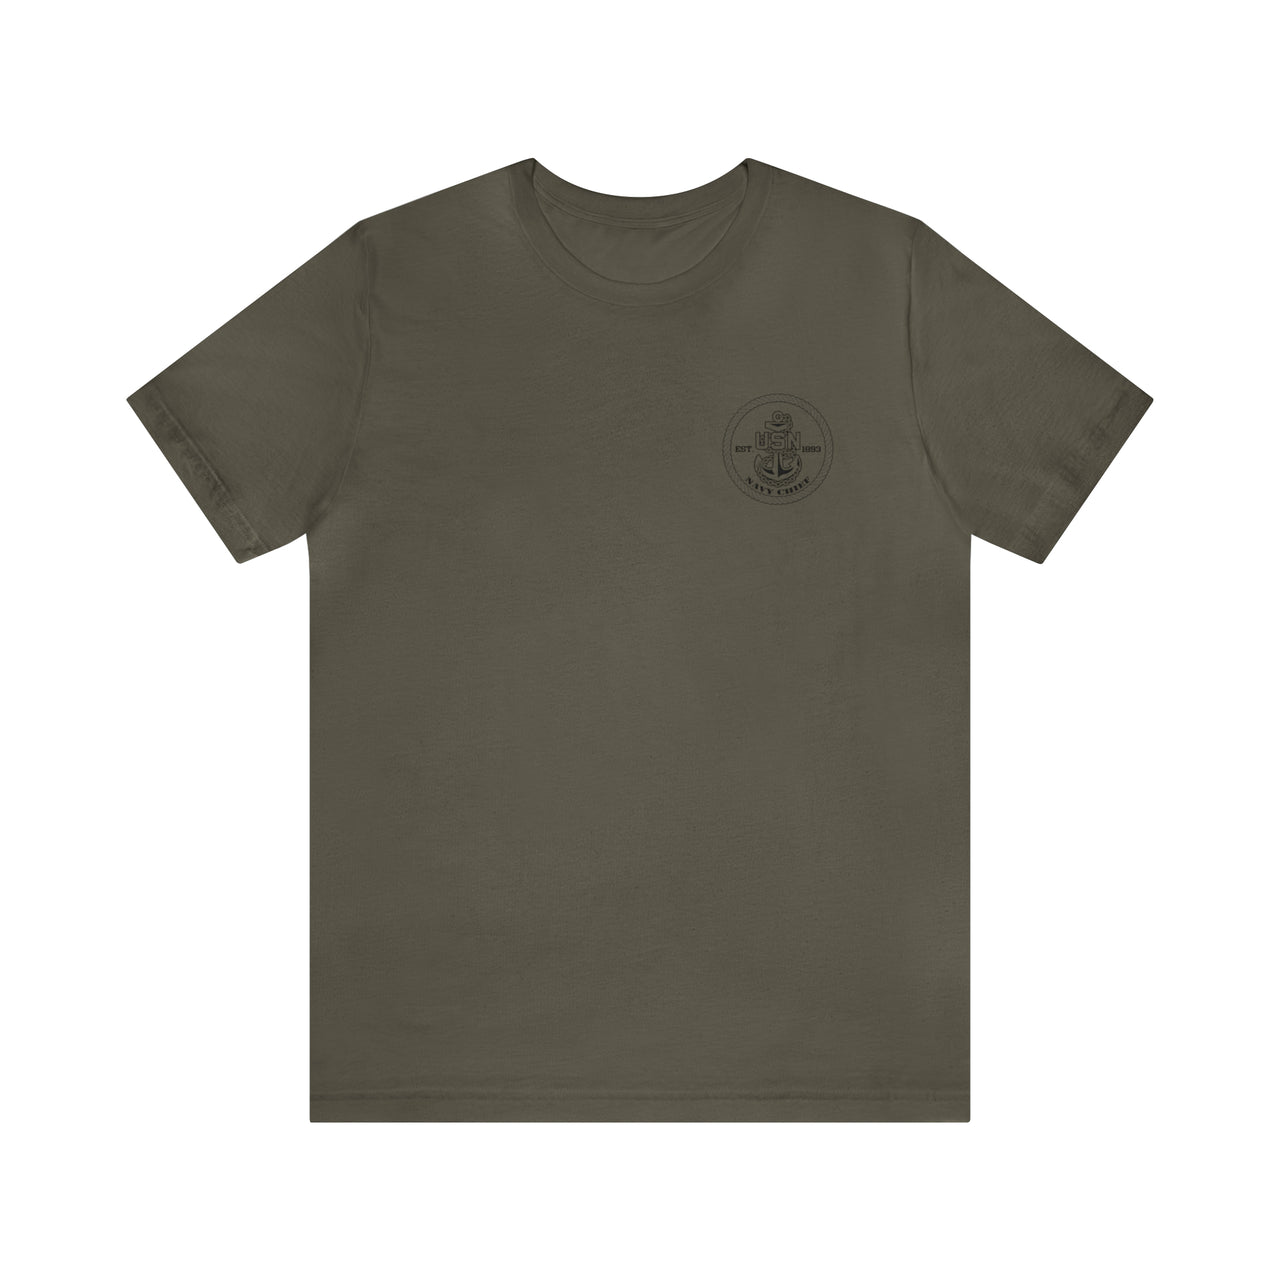 Navy Chief T-Shirt (Black)